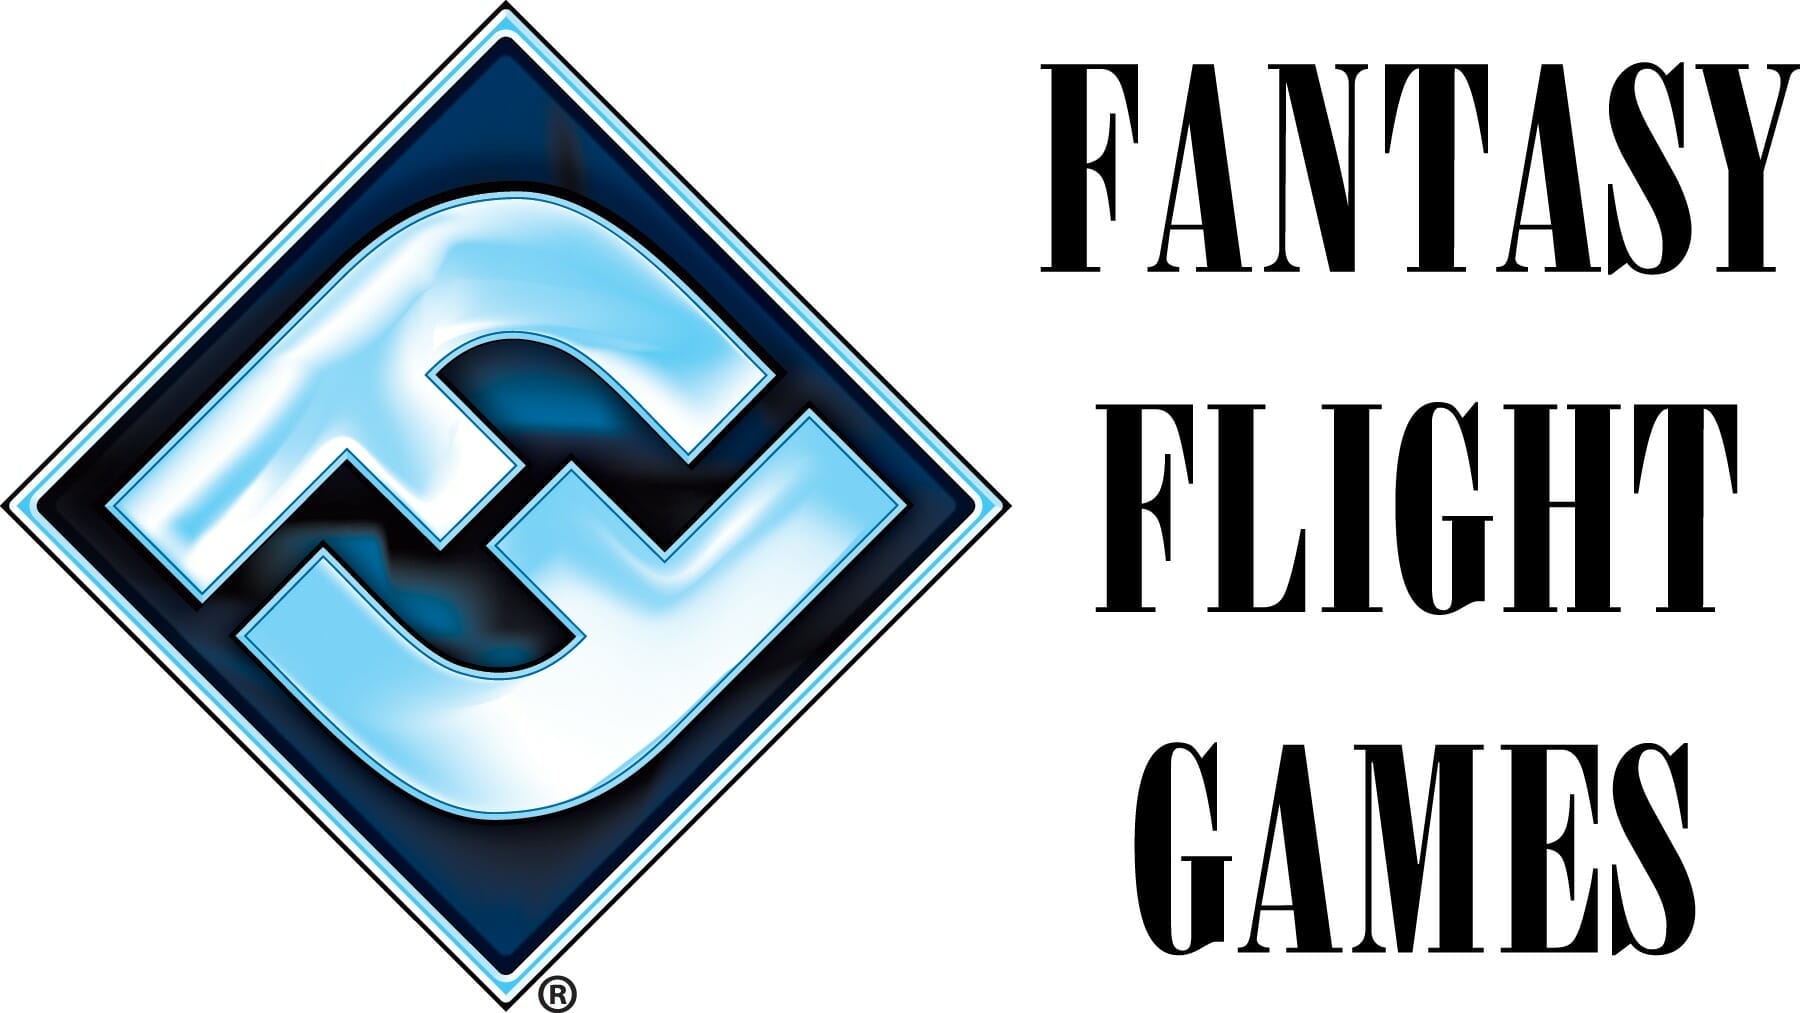 Fantasy Flight Games to close RPG department